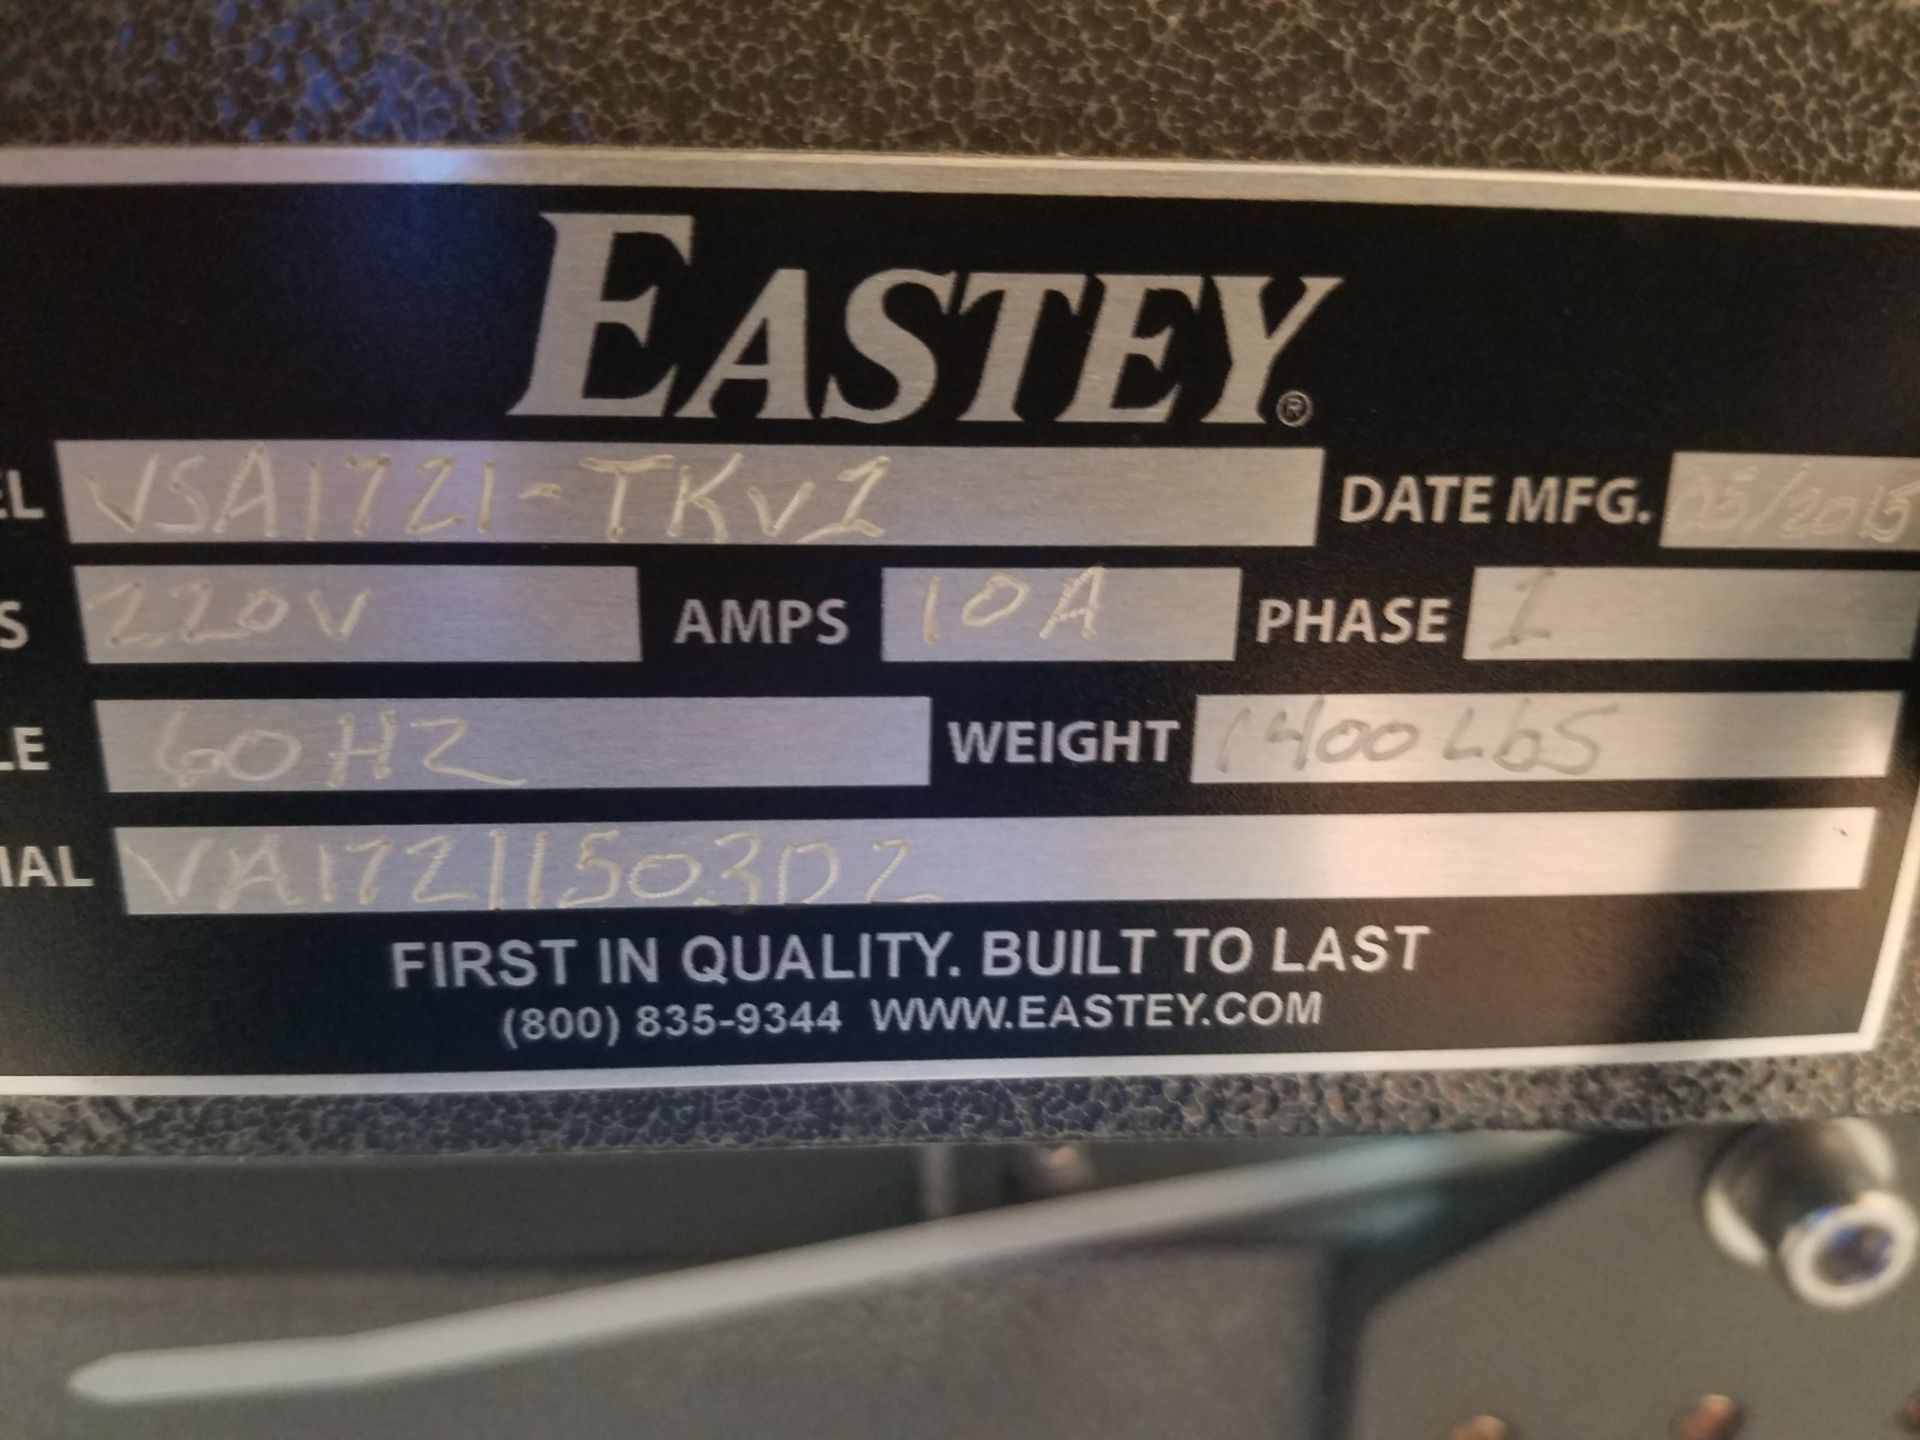 Eastey VSA1721-TKV1 Automatic L-Bar Sealer, S/N VA1721150307, Volt 220, Single Phase, YR. 2015 - Image 5 of 5